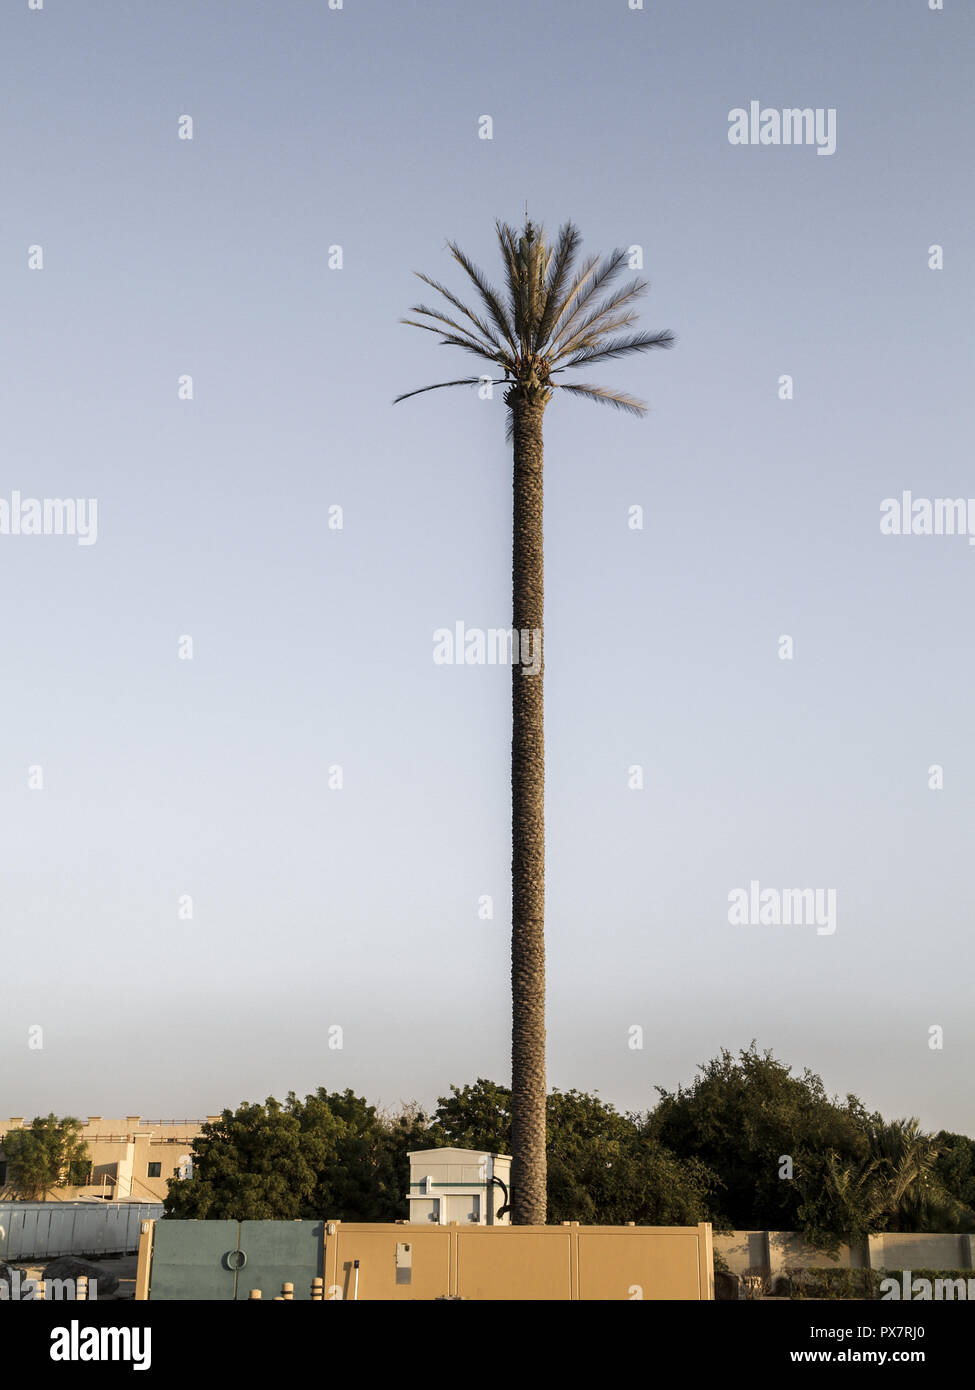 Dubai, antena móvil en forma de palmeras, Emiratos Arabes Unidos Foto de stock